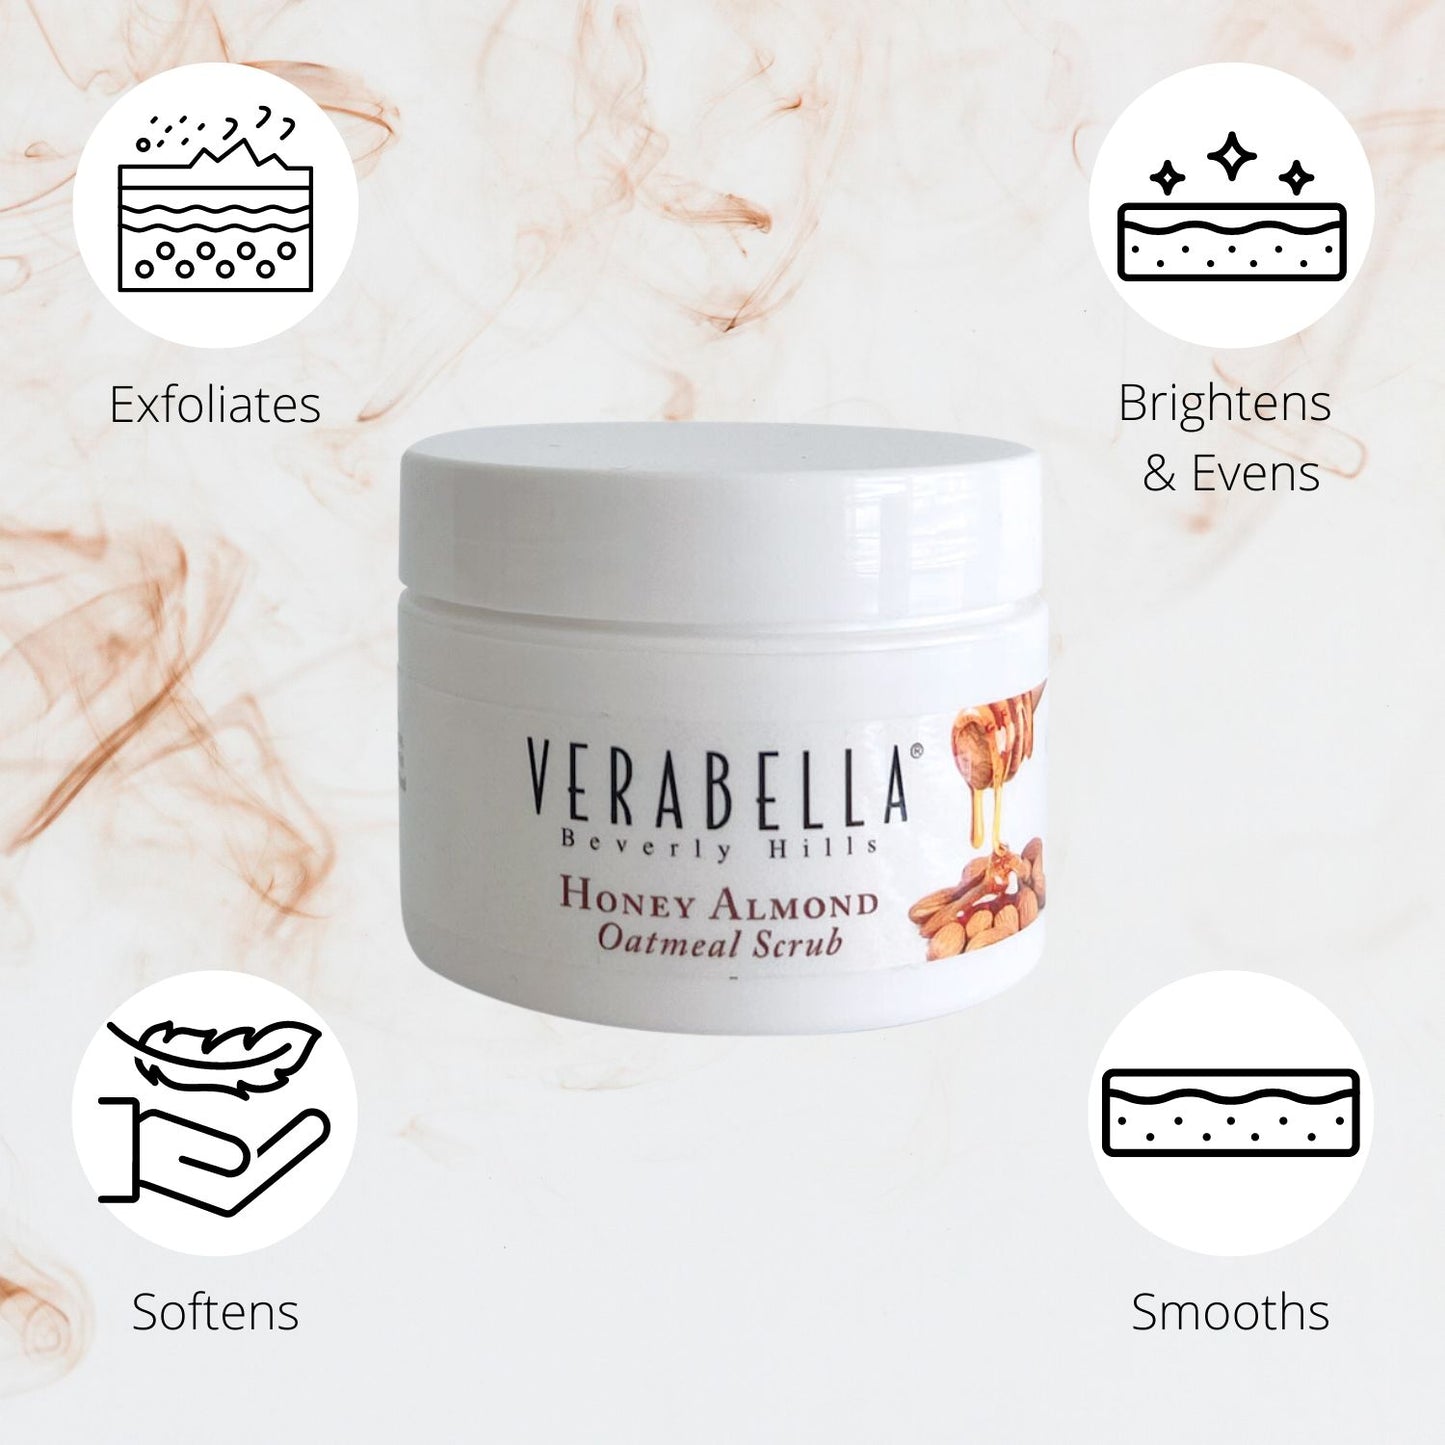 Benefits - Verabella Honey Almond Oatmeal Scrub